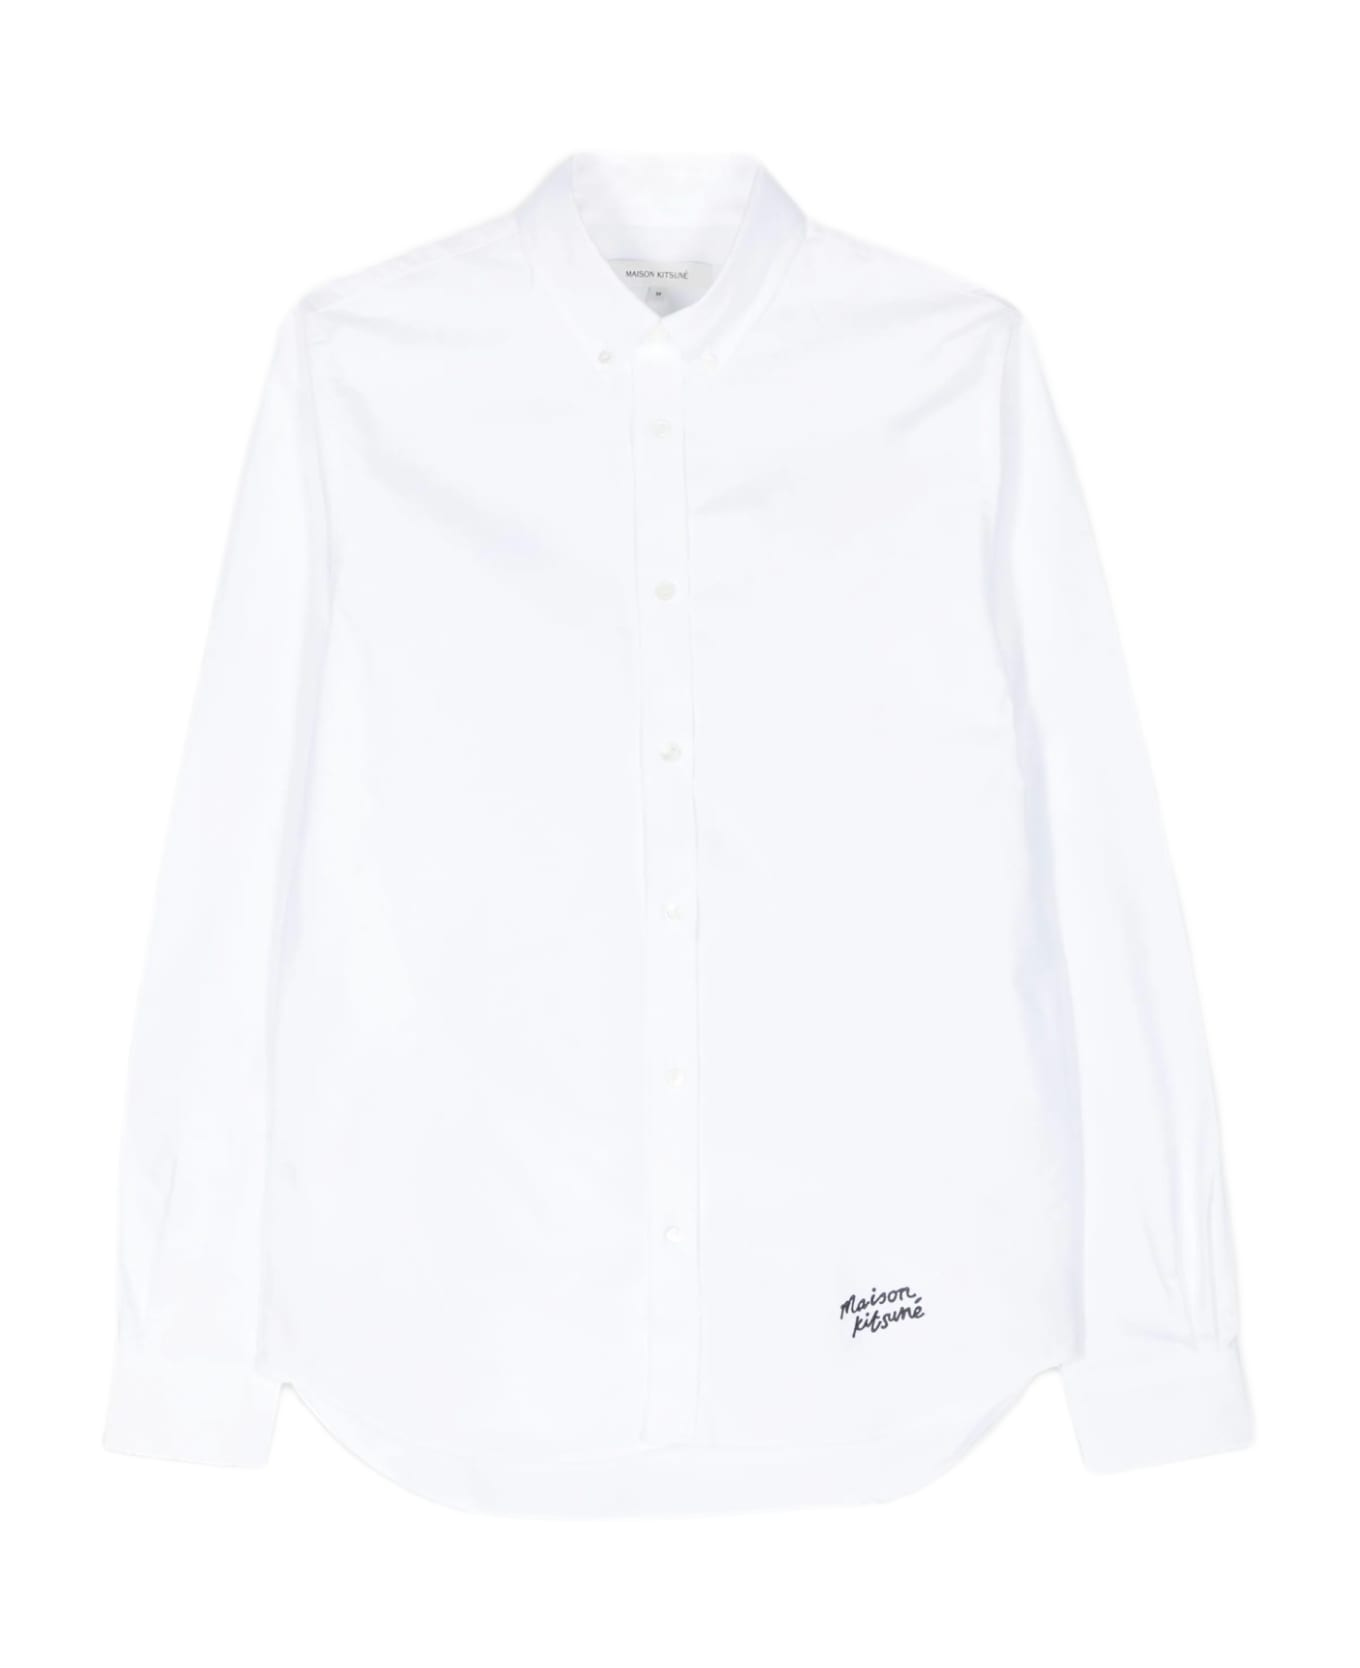 Maison Kitsuné Handwritting Casual Bd Shirt White cotton long sleeves shirt with logo embroidery - Handwriting Casual BD Shirt - Bianco